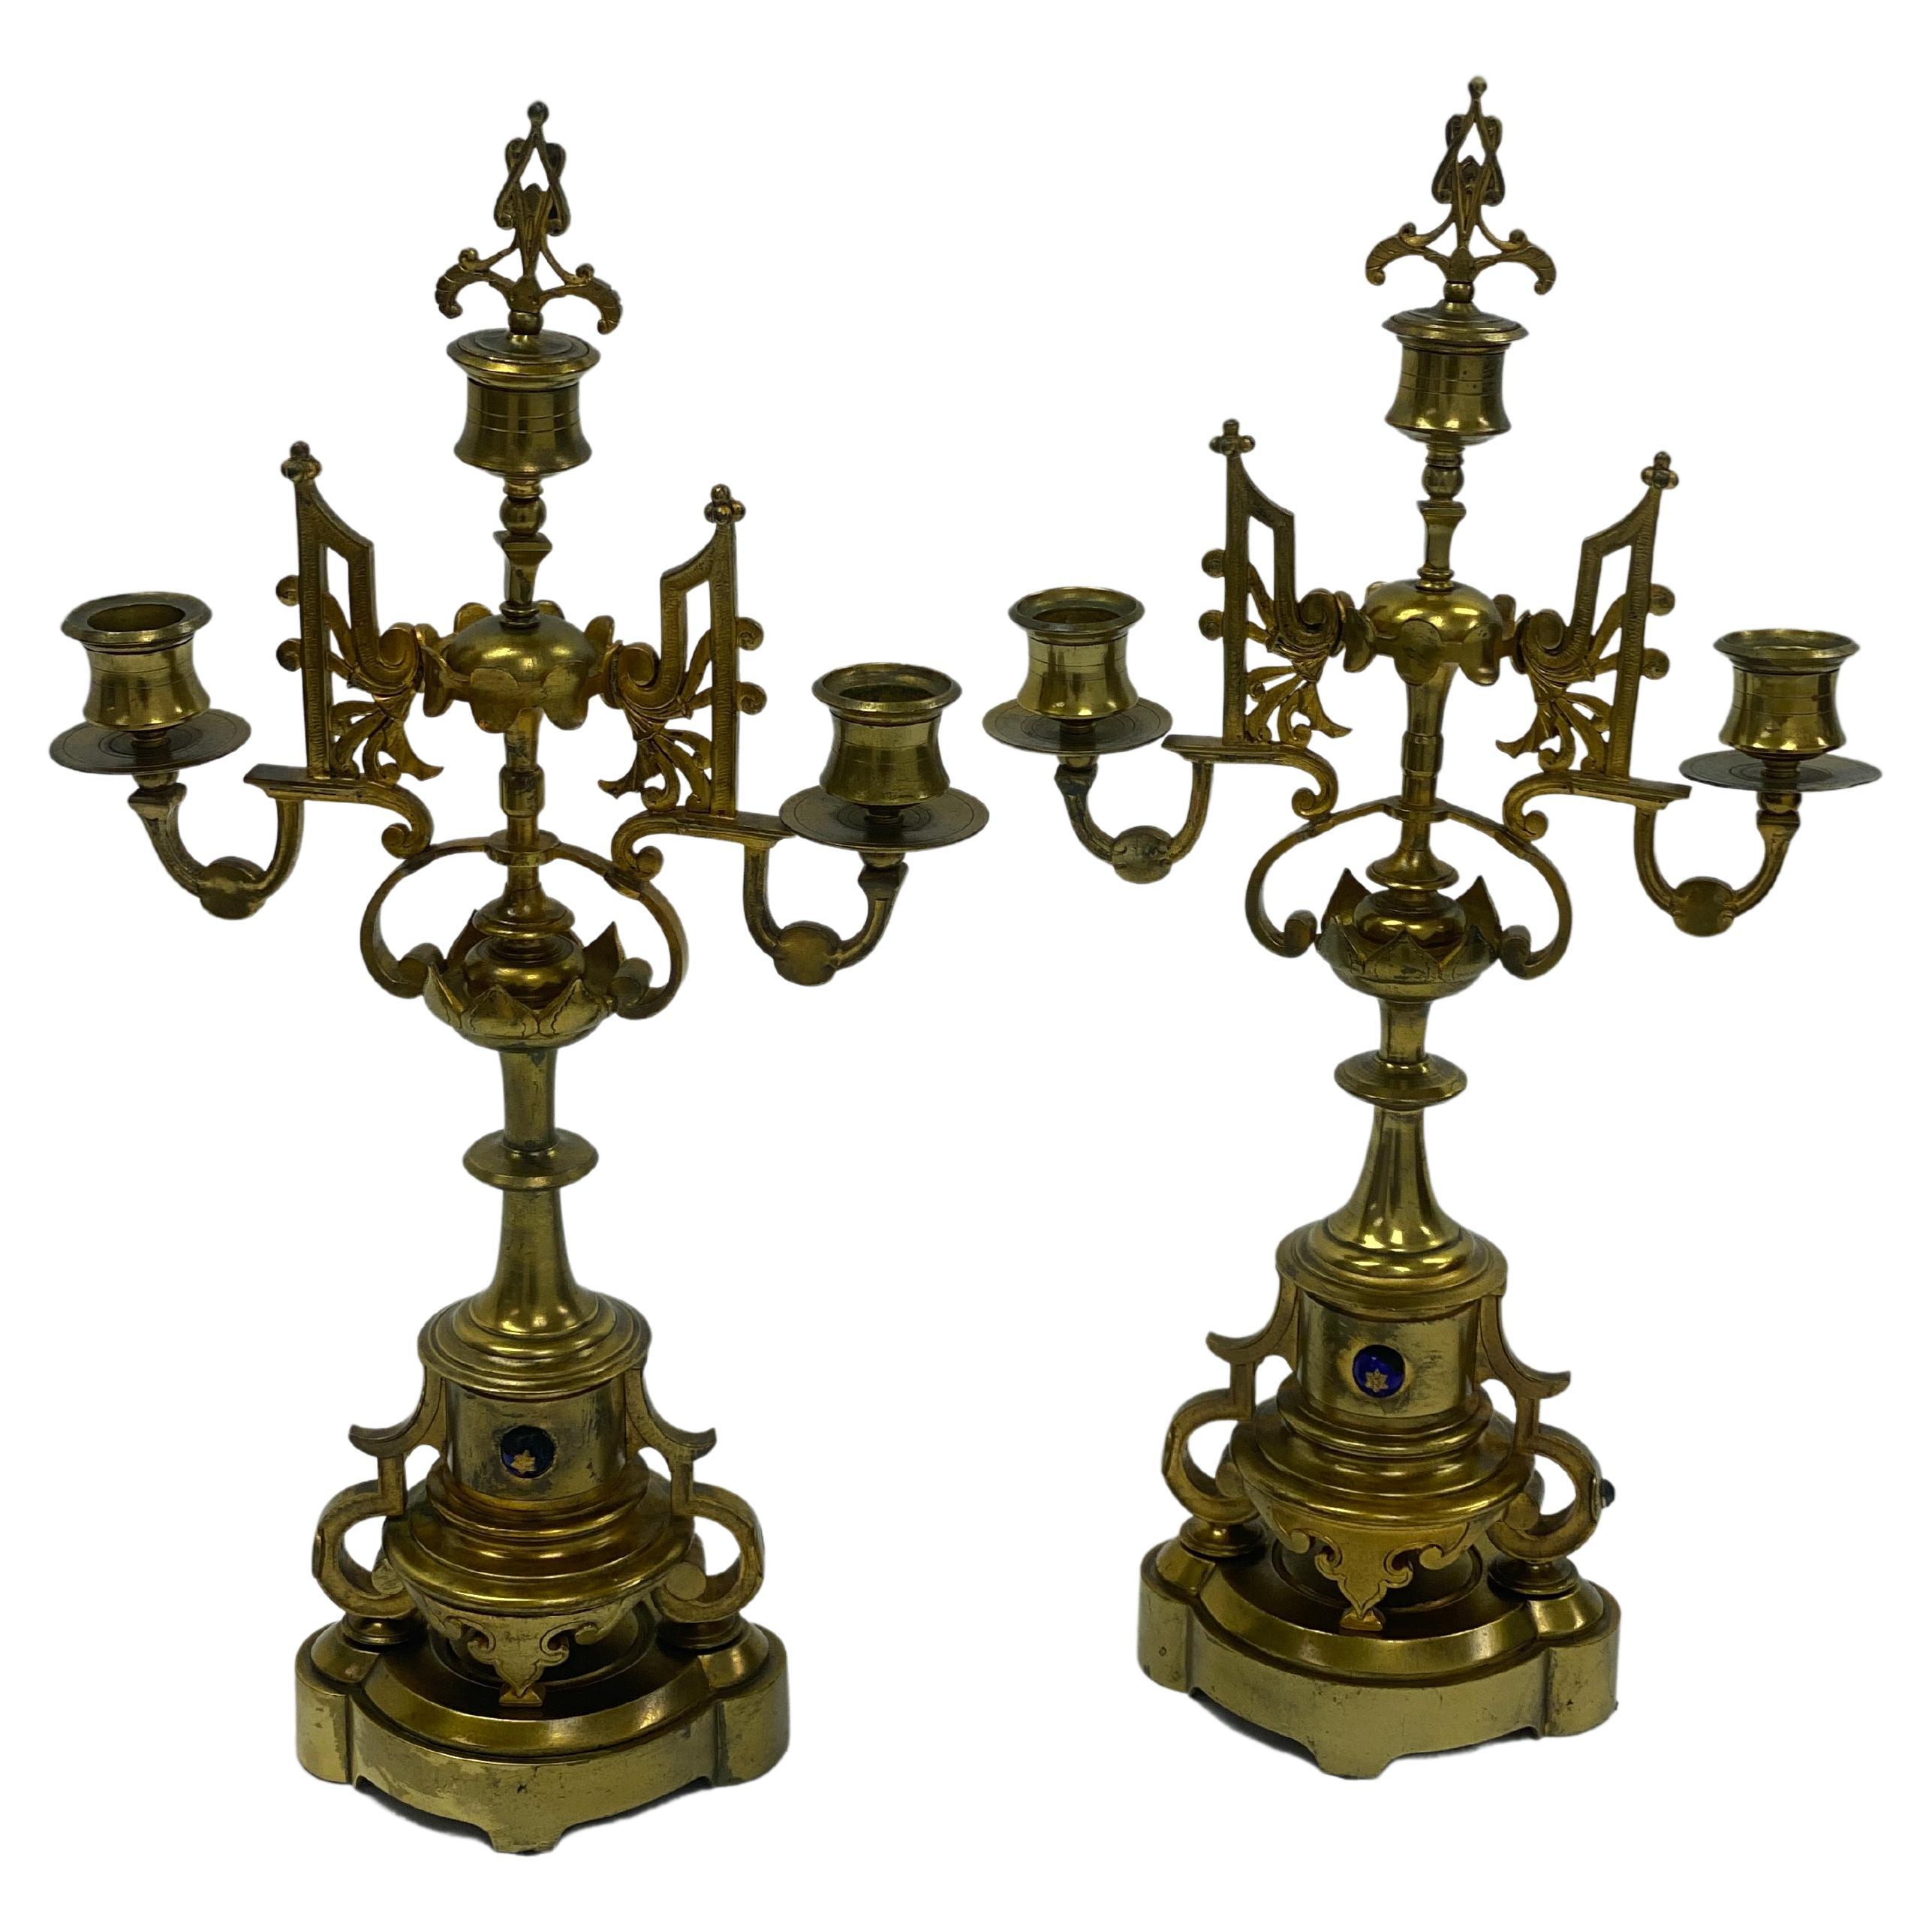 Pair of 19th century bronze Gothic candelabras

Measures: 17.5